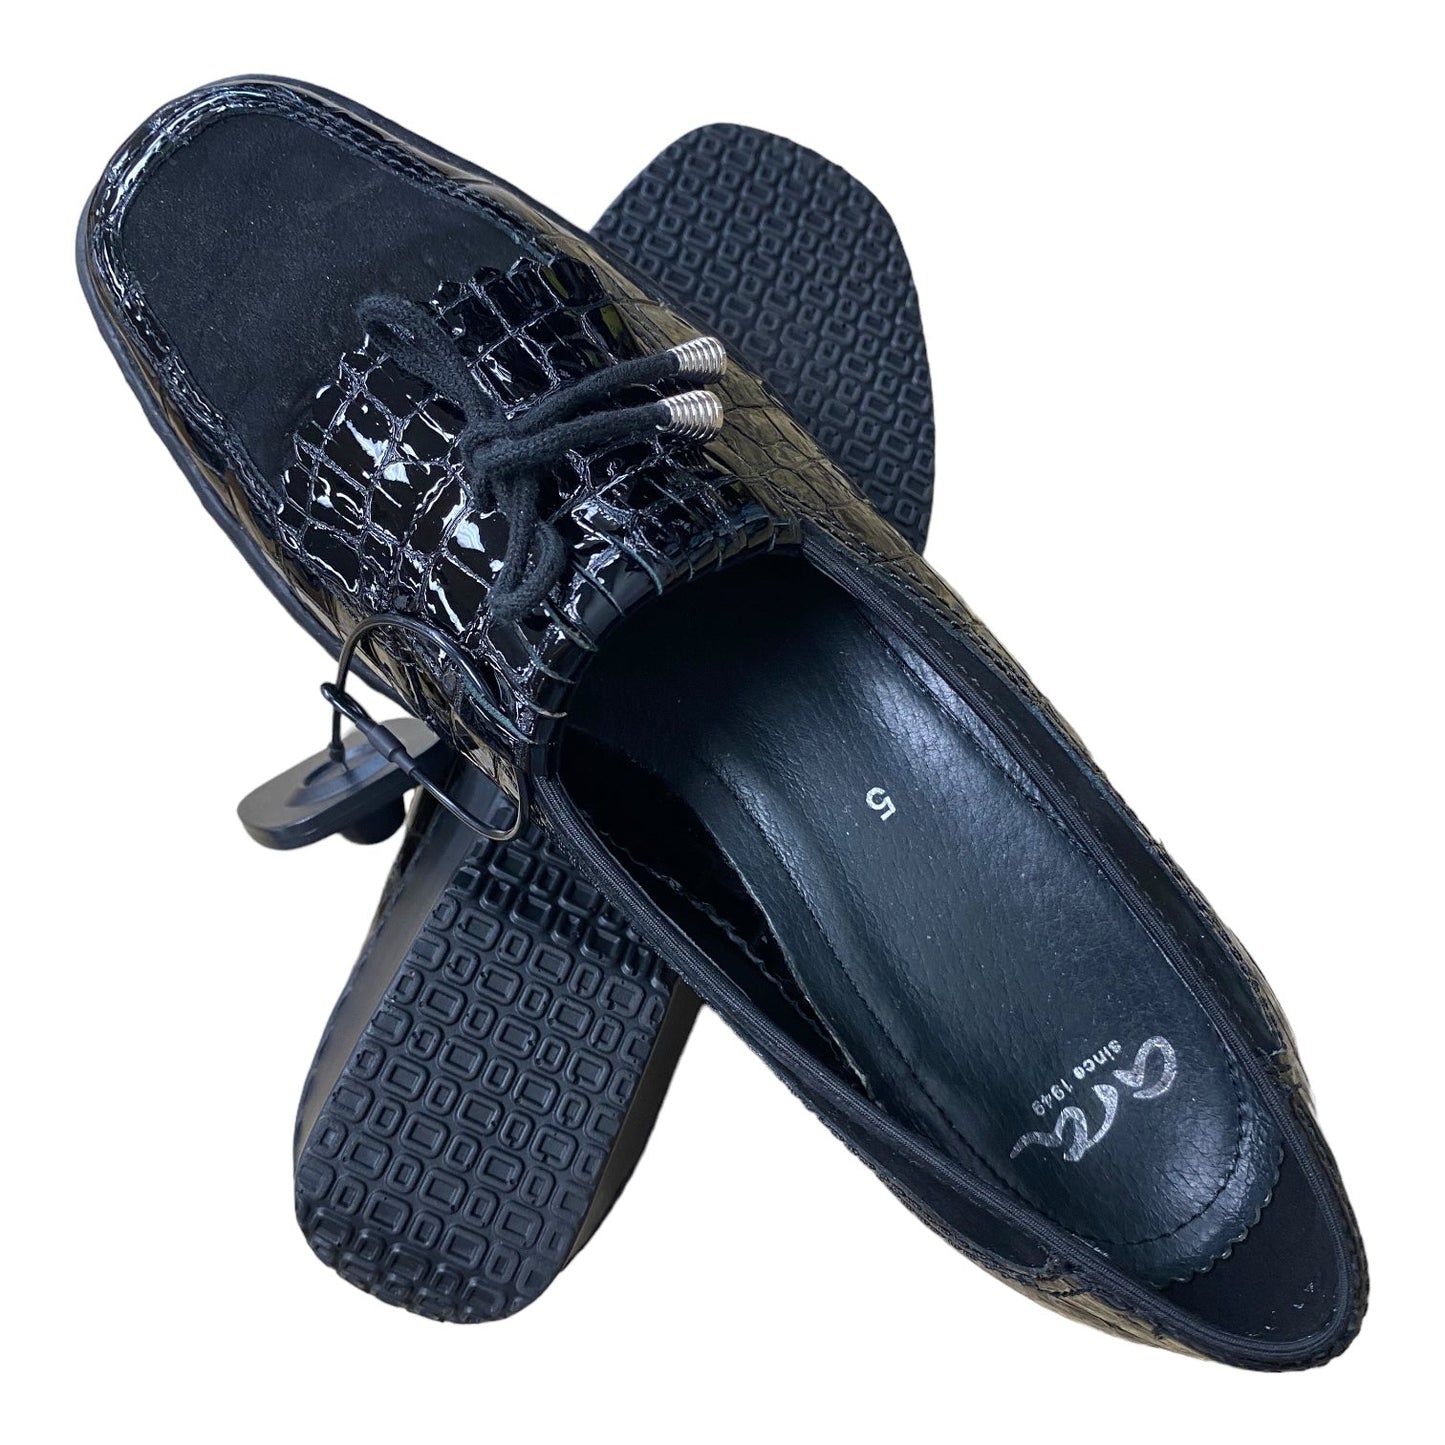 Black Shoes Heels Block Cmc, Size 7.5